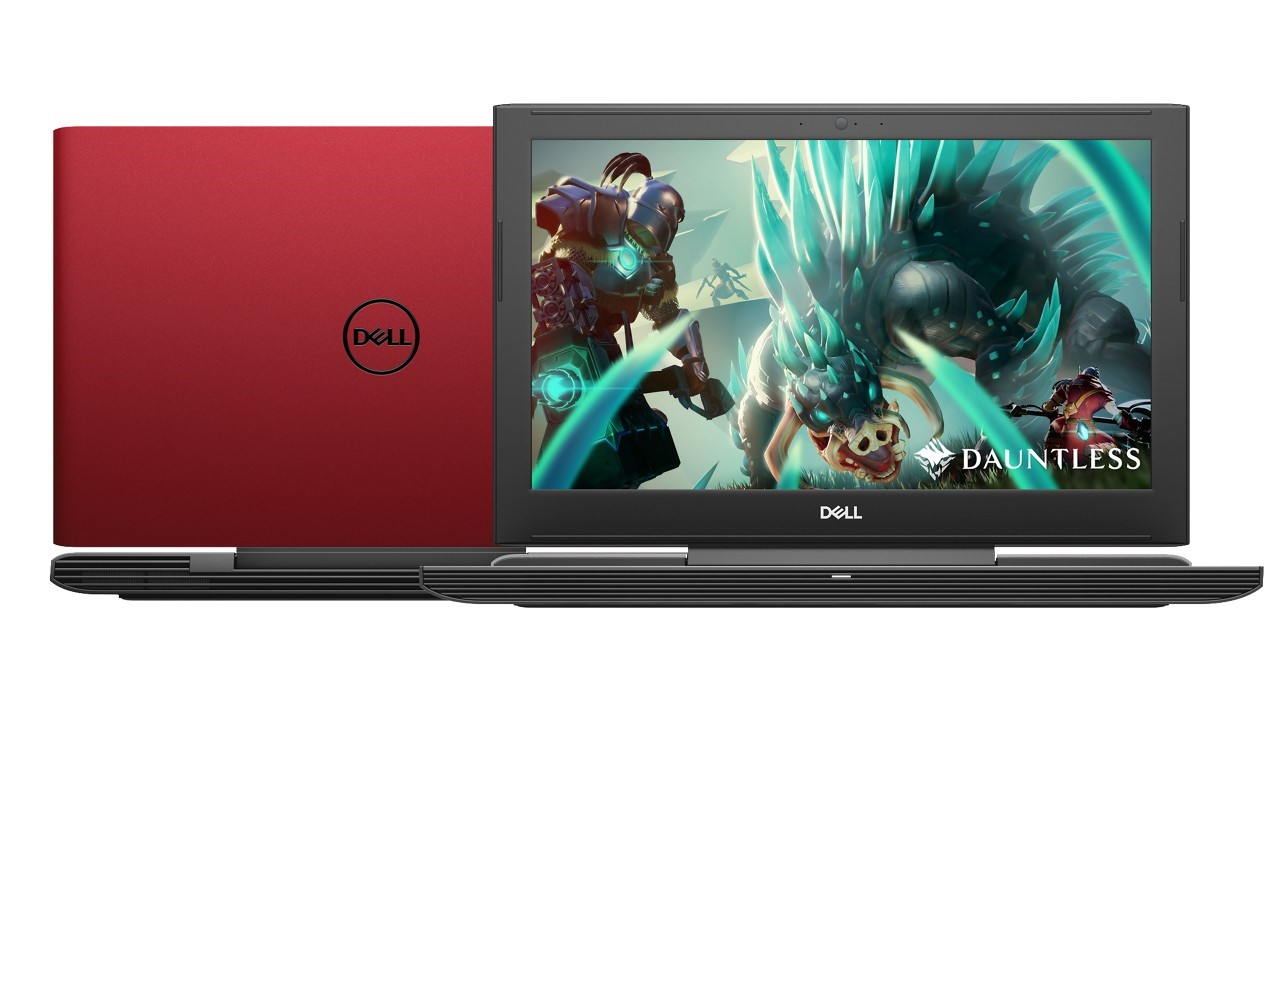 Dell G5 Gaming Laptop 15.6" Full HD, Intel Core i7-8750H, NVIDIA GeForce GTX 1050 Ti 4GB, 1TB HDD + 128GB SSD Storage, 8GB RAM, G5587-7037RED-PUS - image 1 of 6